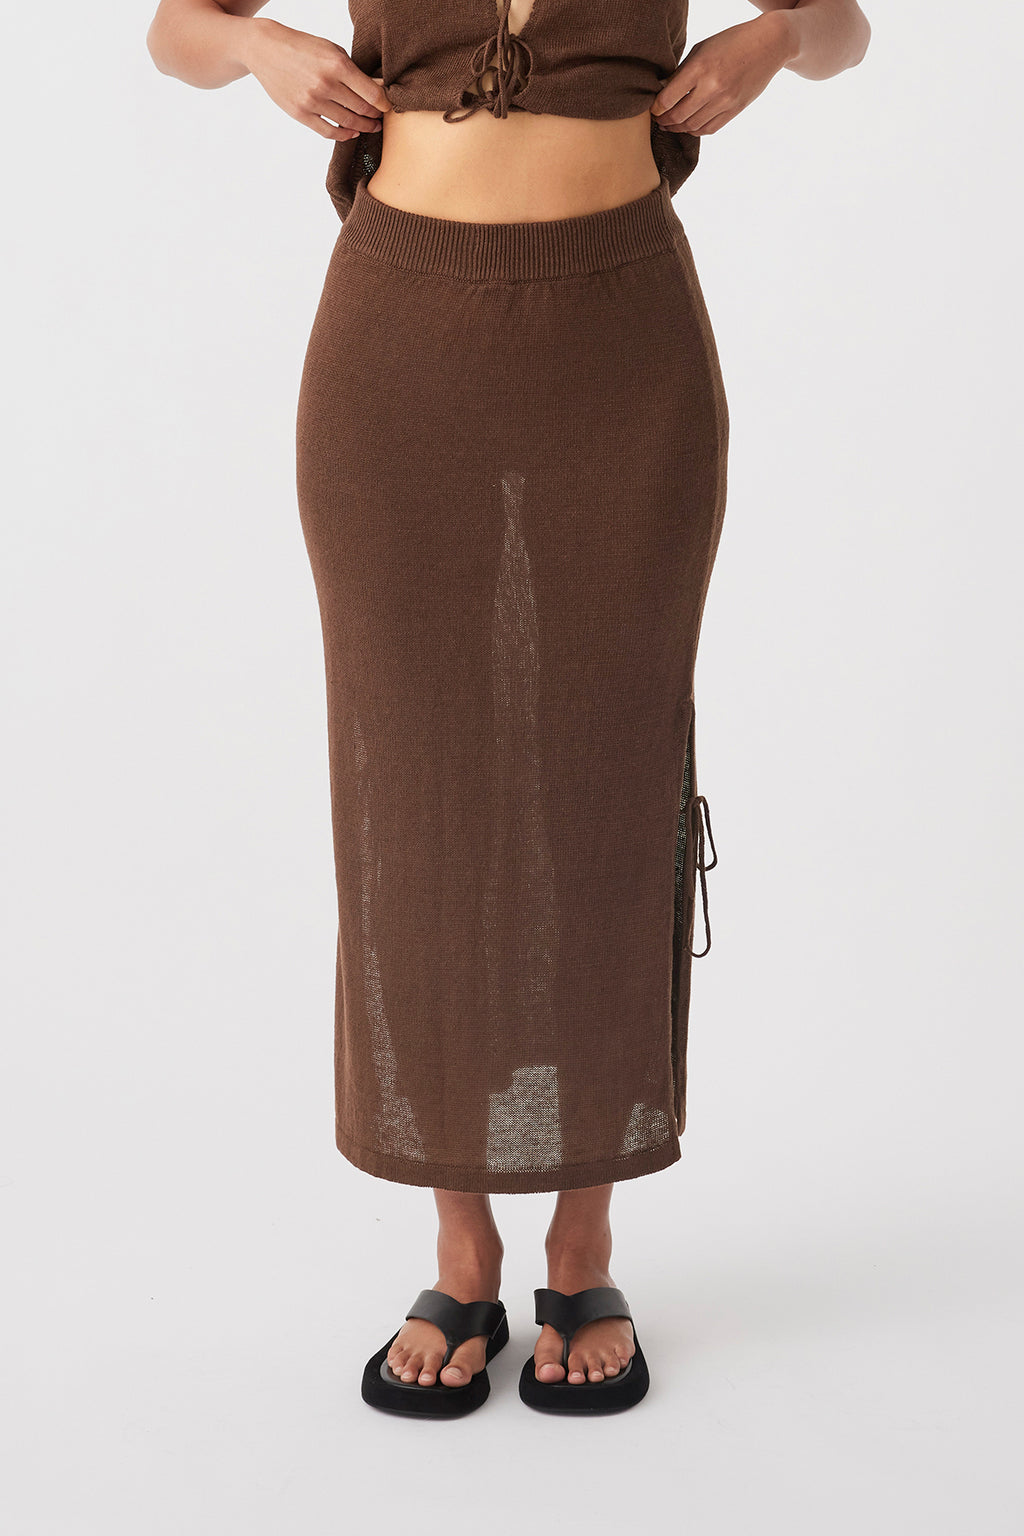 Pearla Skirt - Chocolate